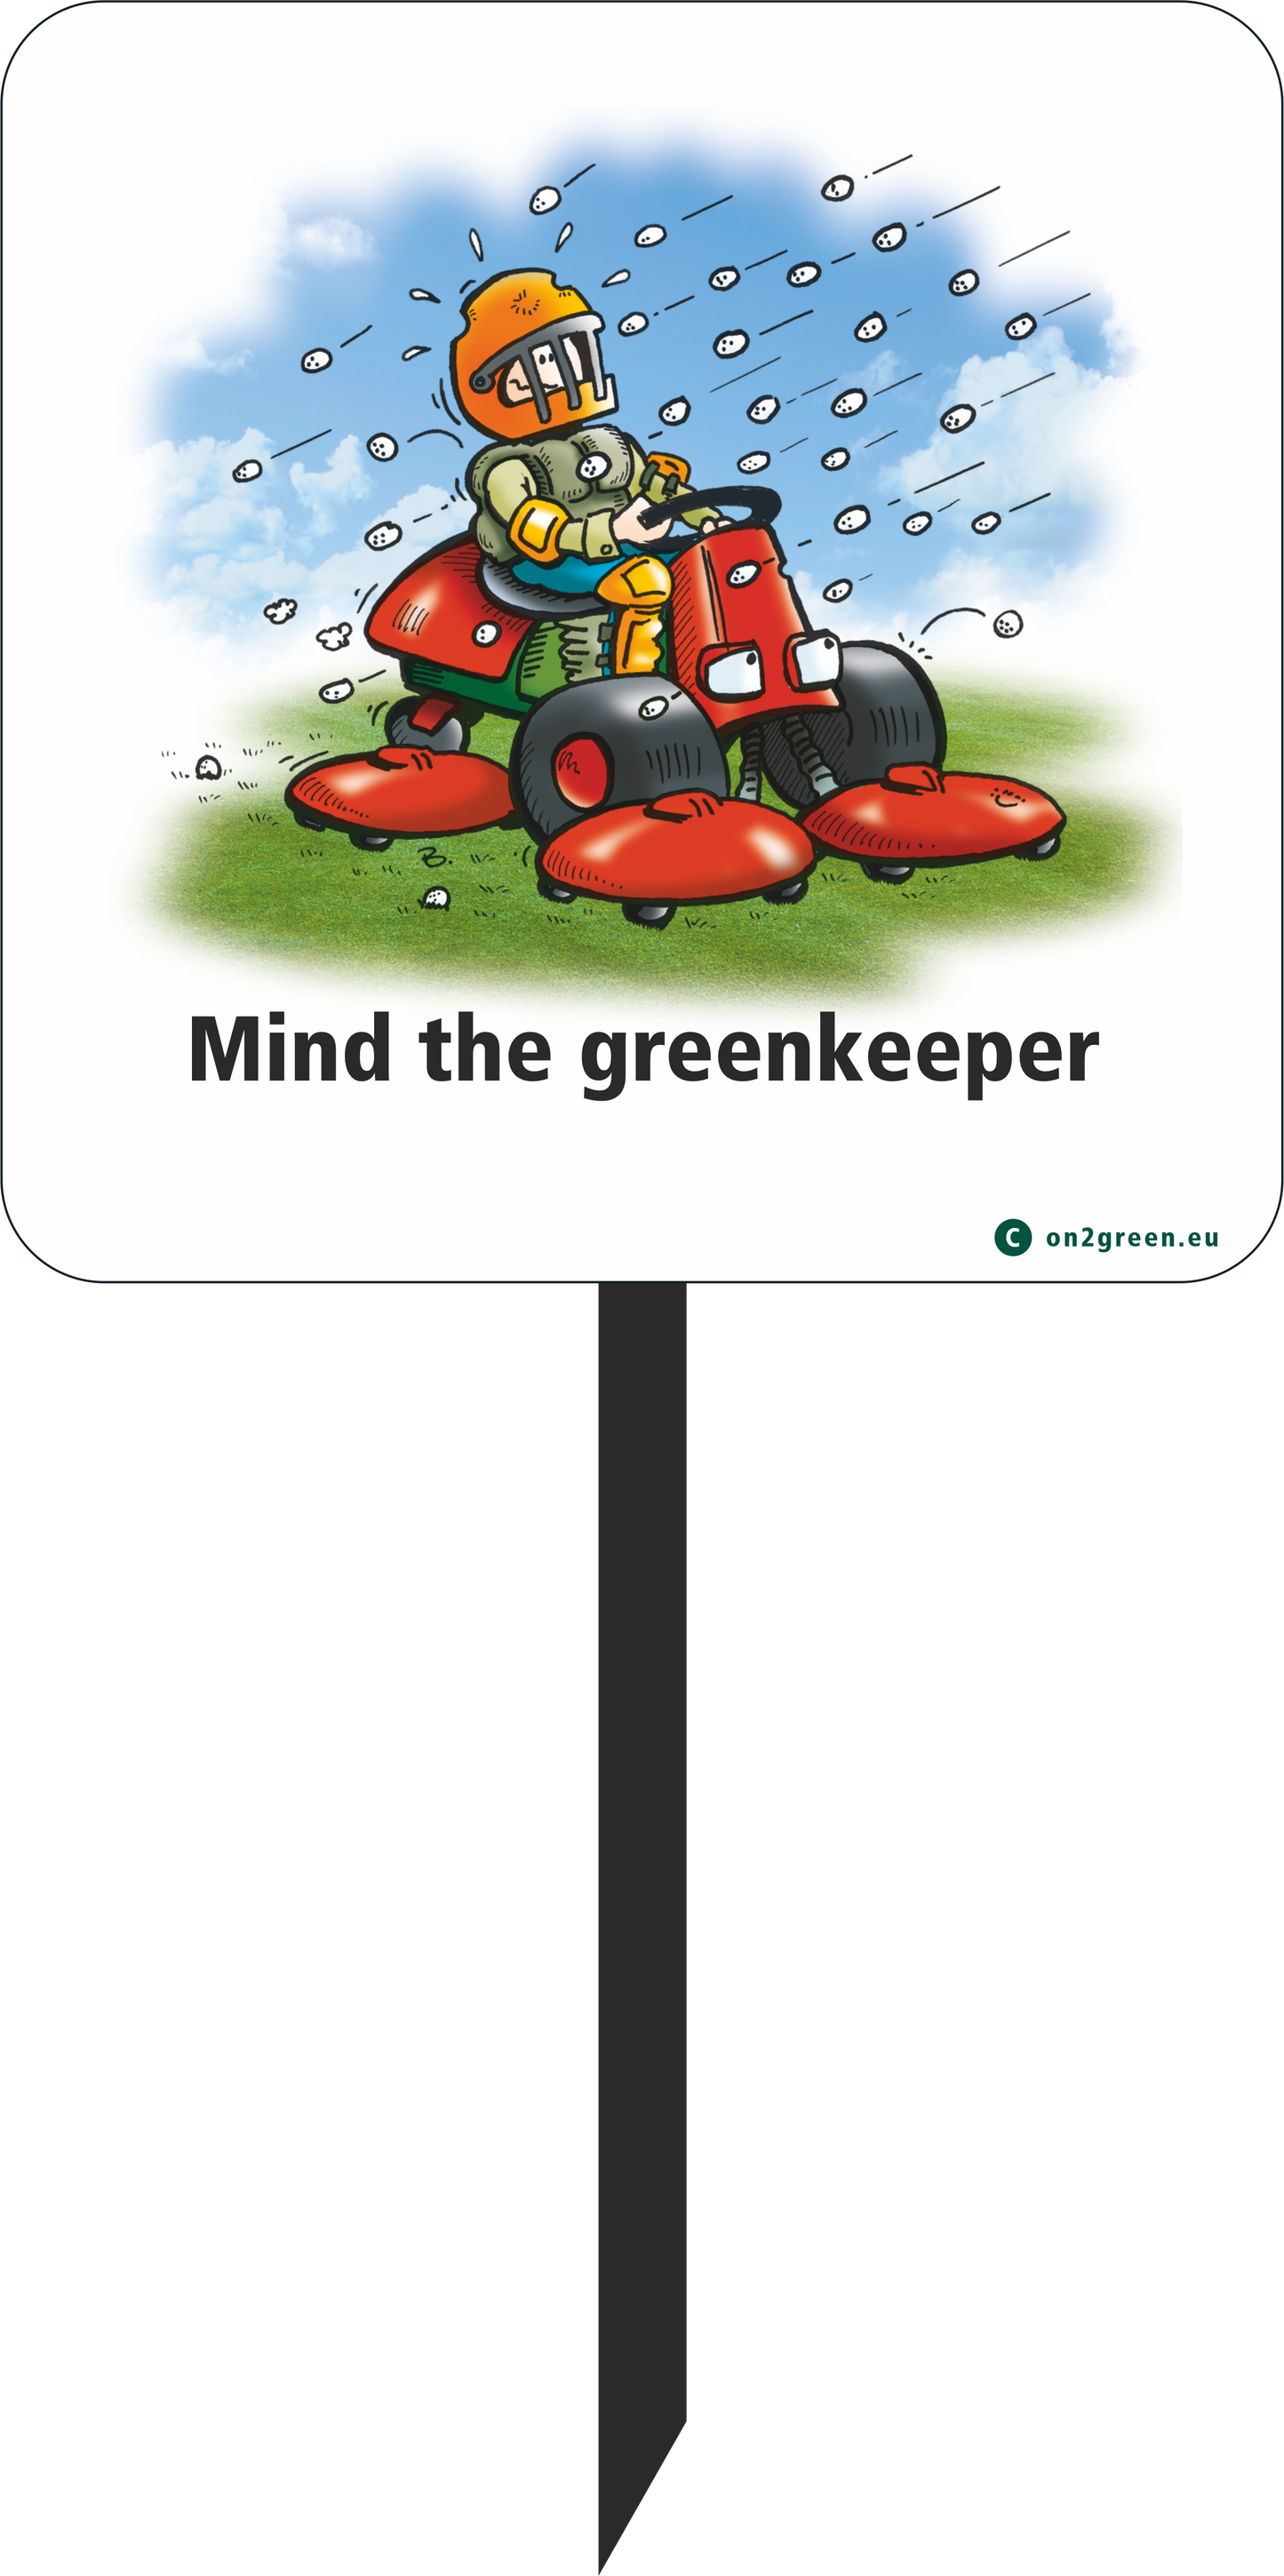 Golf Sign: Mind the greenkeeper